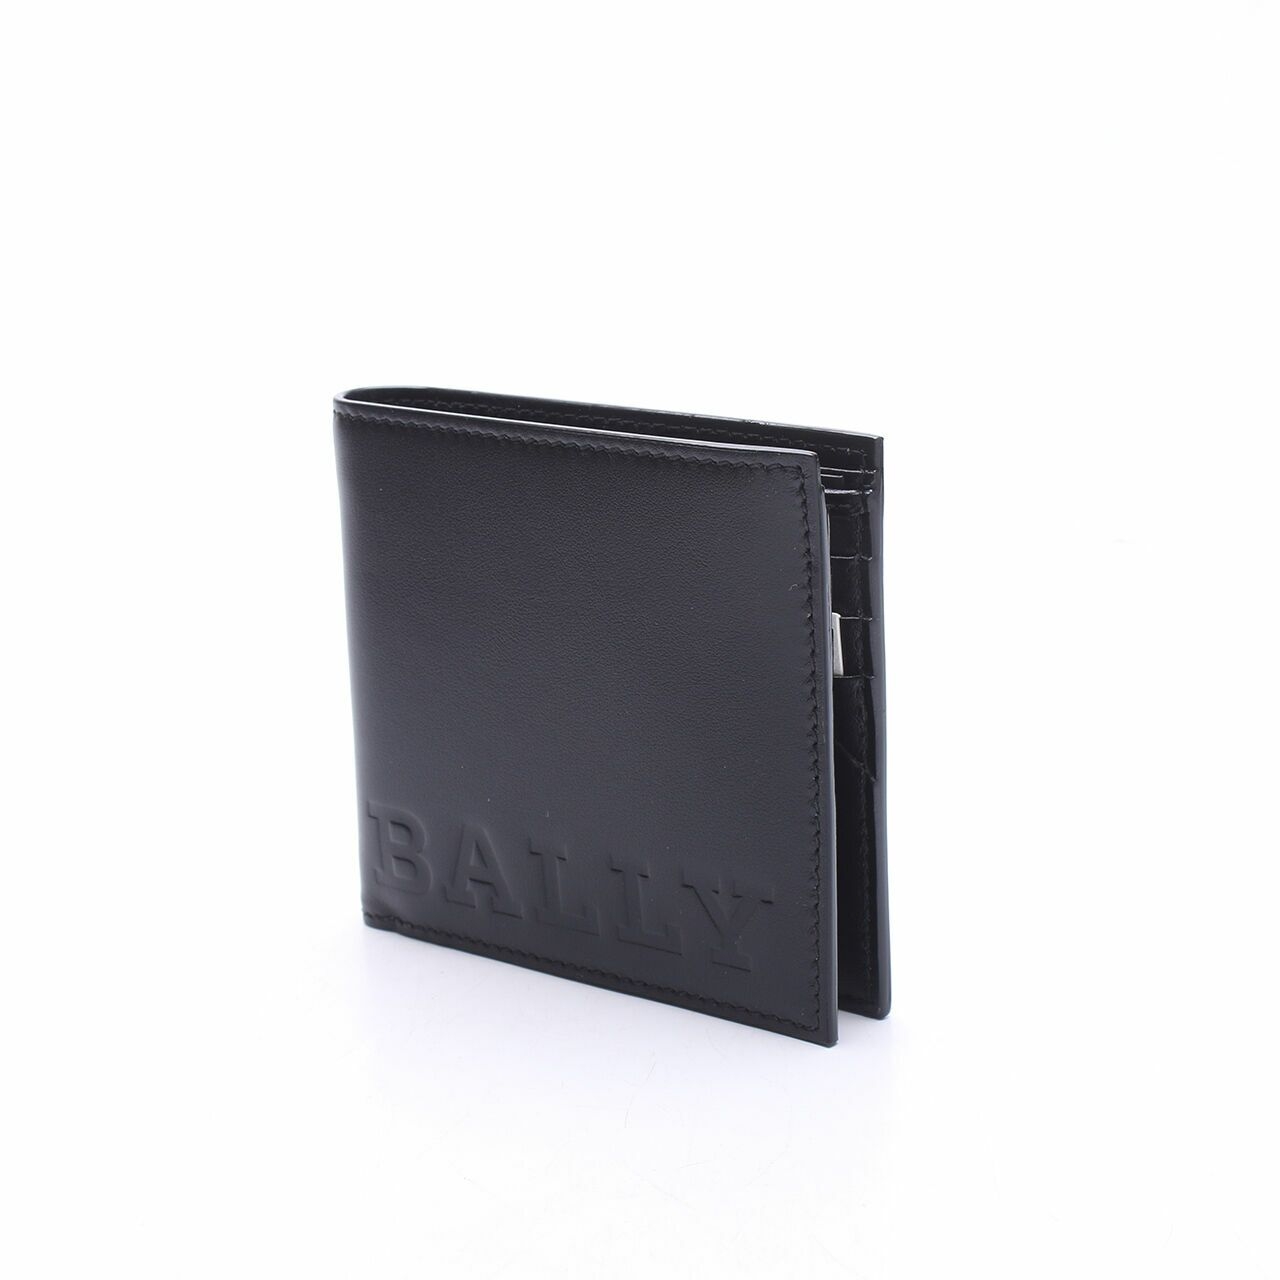 Bally Giftbox Bold Black Wallet & Keychain